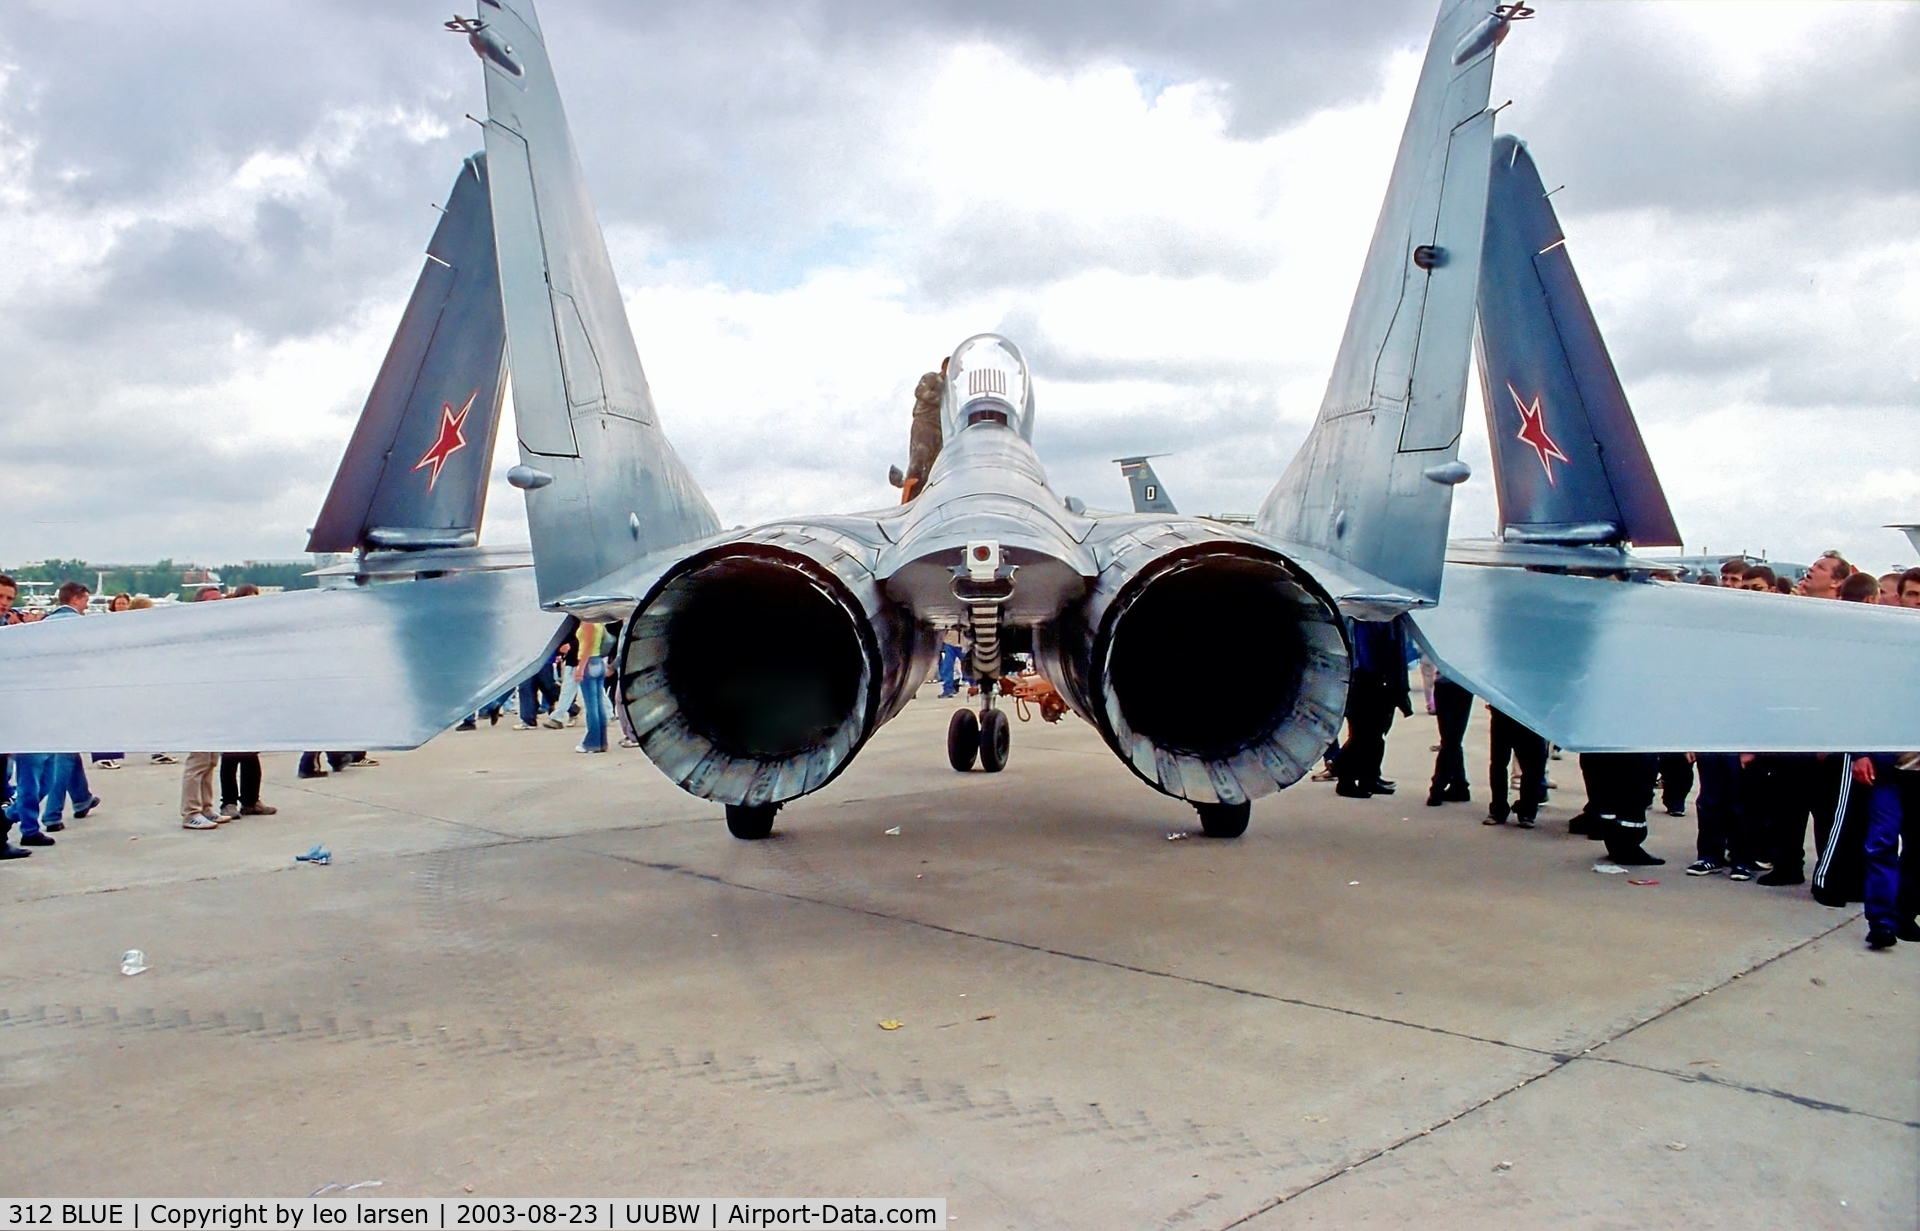 312 BLUE, 1988 Mikoyan-Gurevich MiG-29K C/N 296.27579, Zhukovsky Moscow 23.8.03